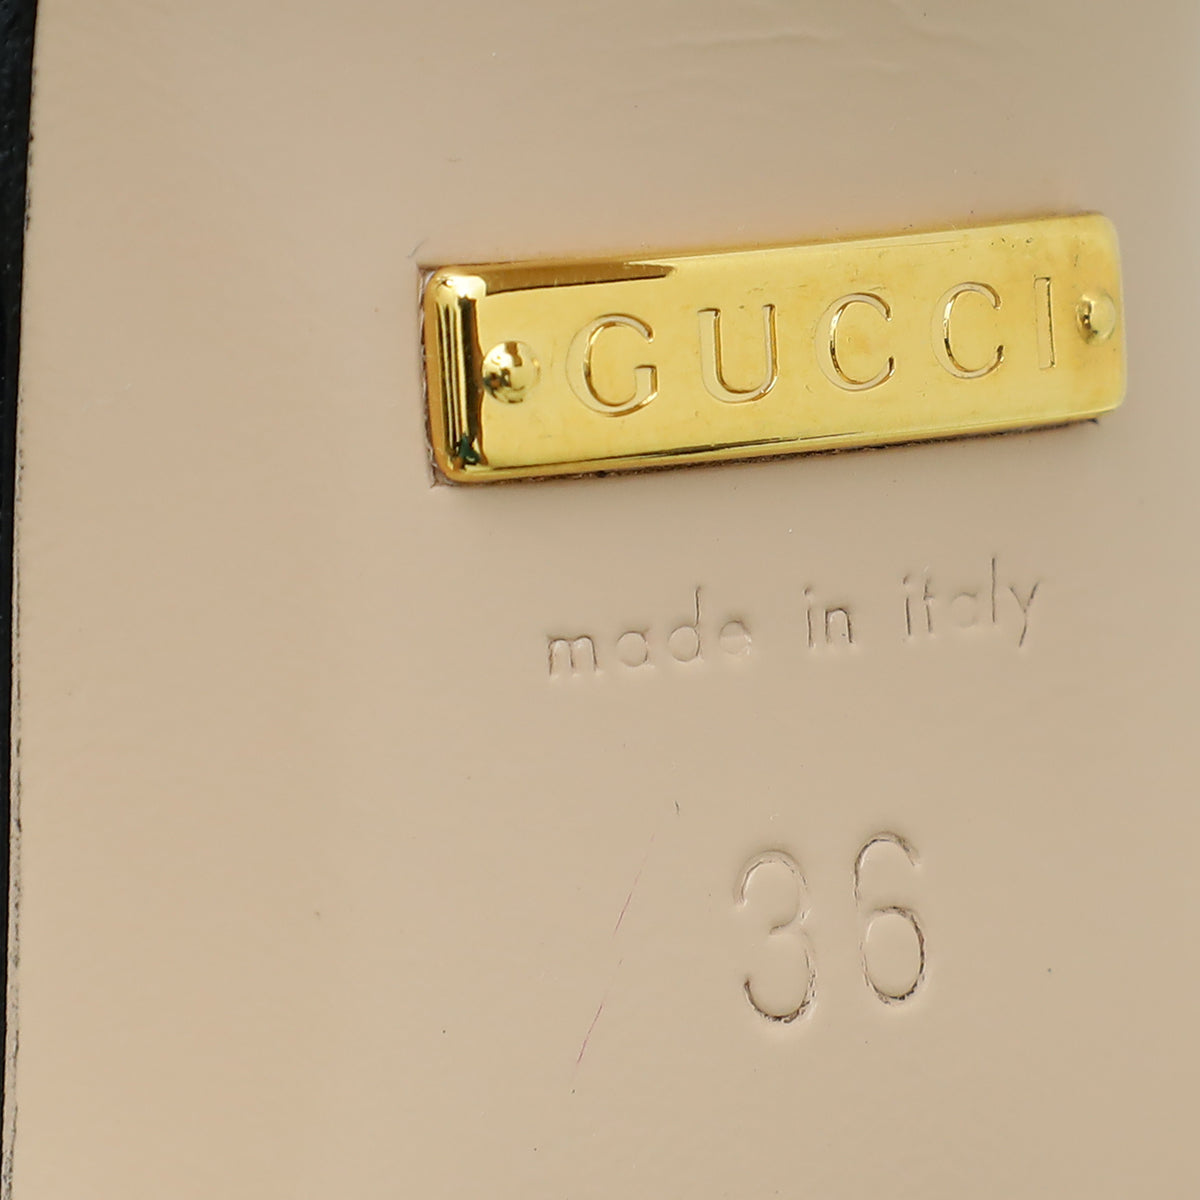 Gucci Black GG Marmont Slide Mules Sandal 36